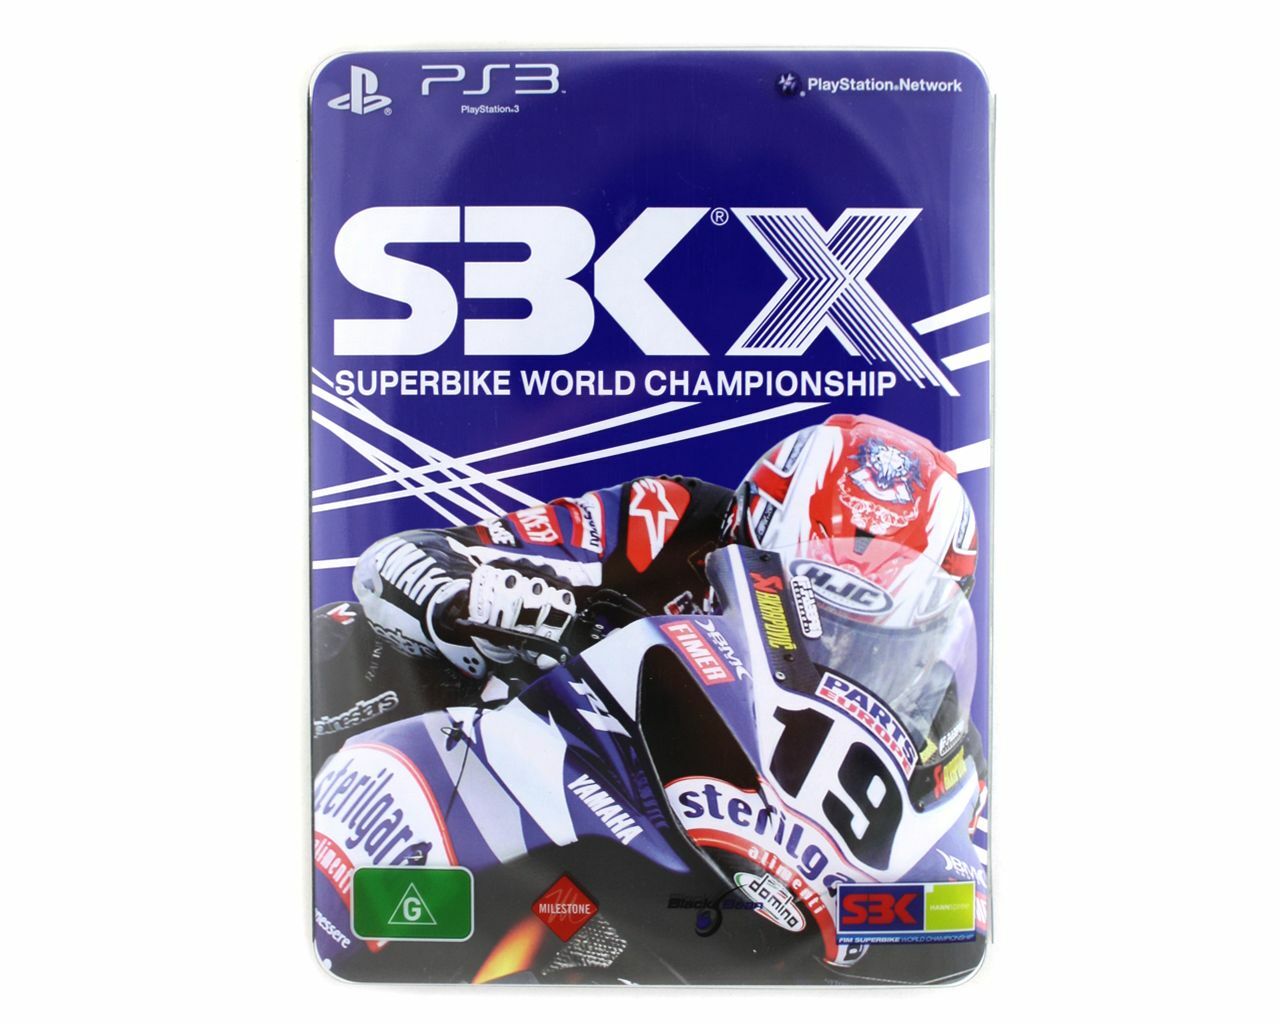 sbk superbike world championship ps3 download